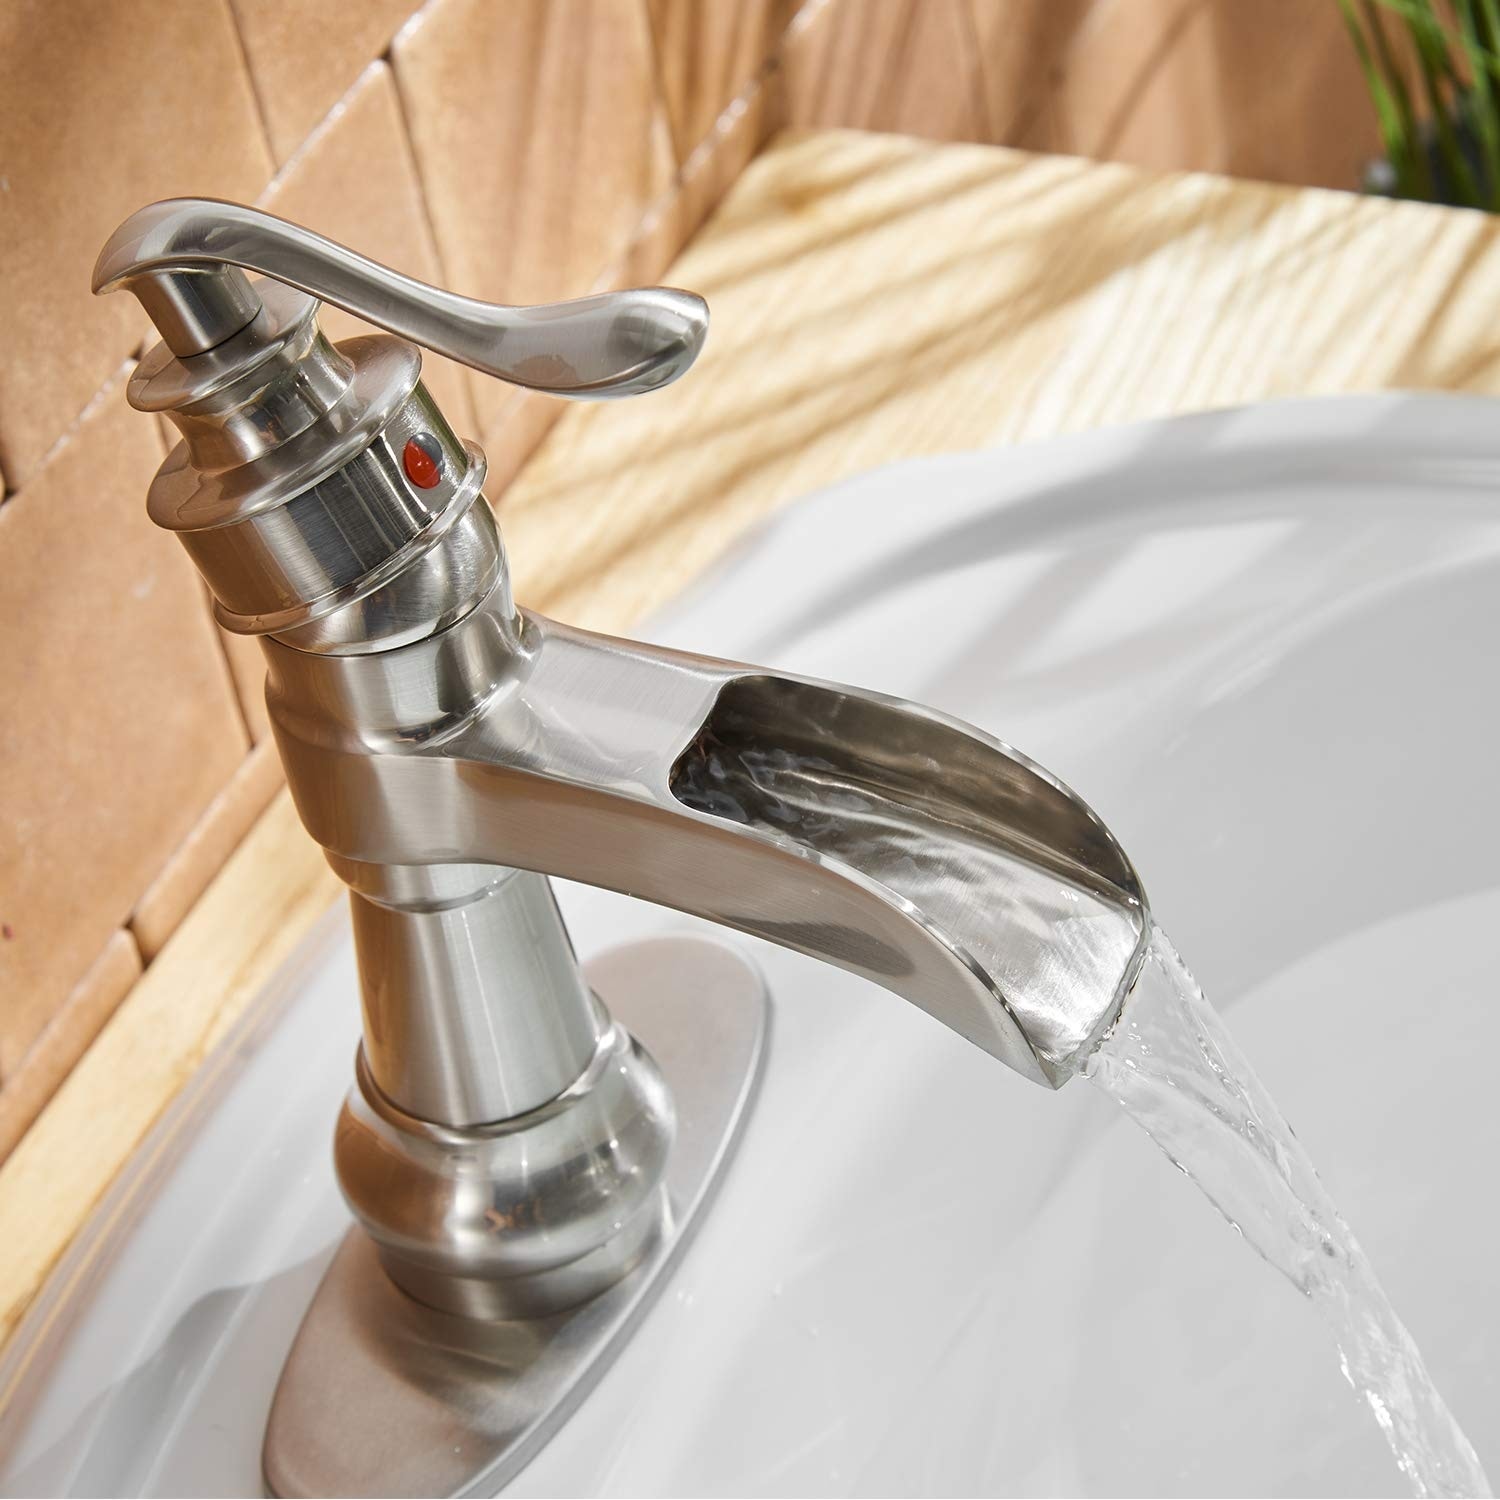 Vibrantbath Waterfall Bathroom Sink Faucets Deck Mount Lavatory On Sale Overstock 29039771